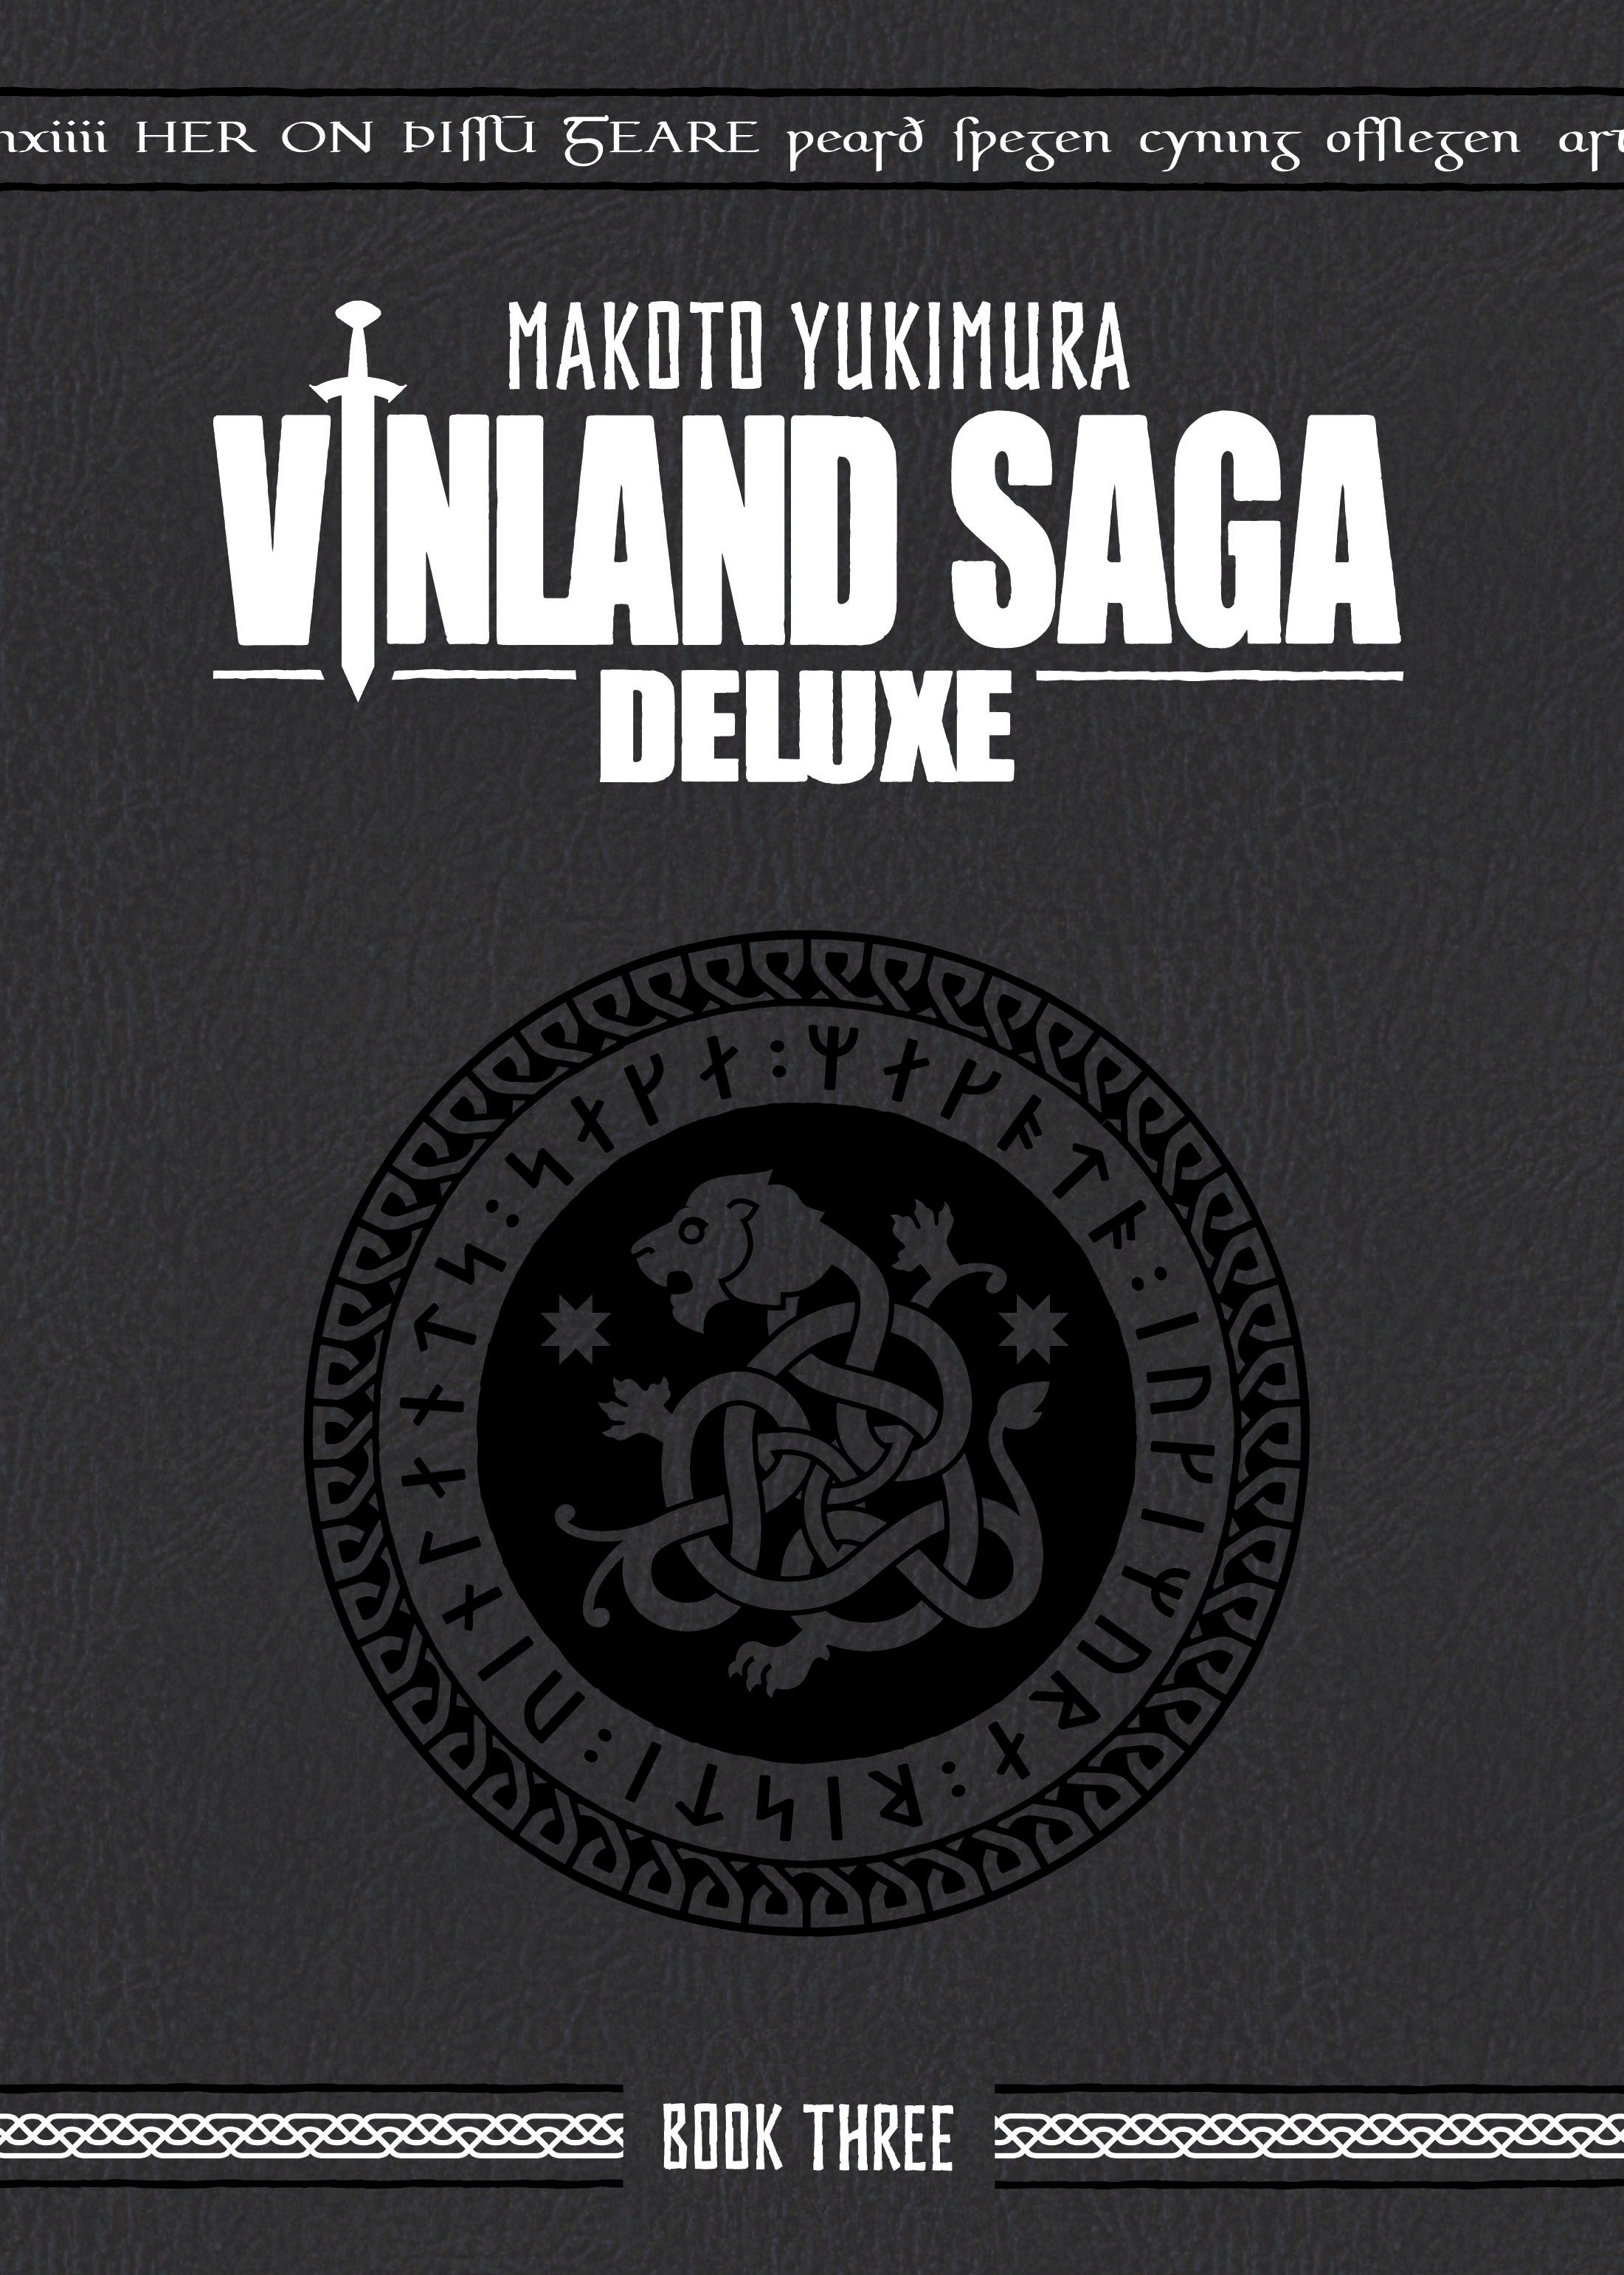 Vinland Saga Deluxe Hardcover Volume 3